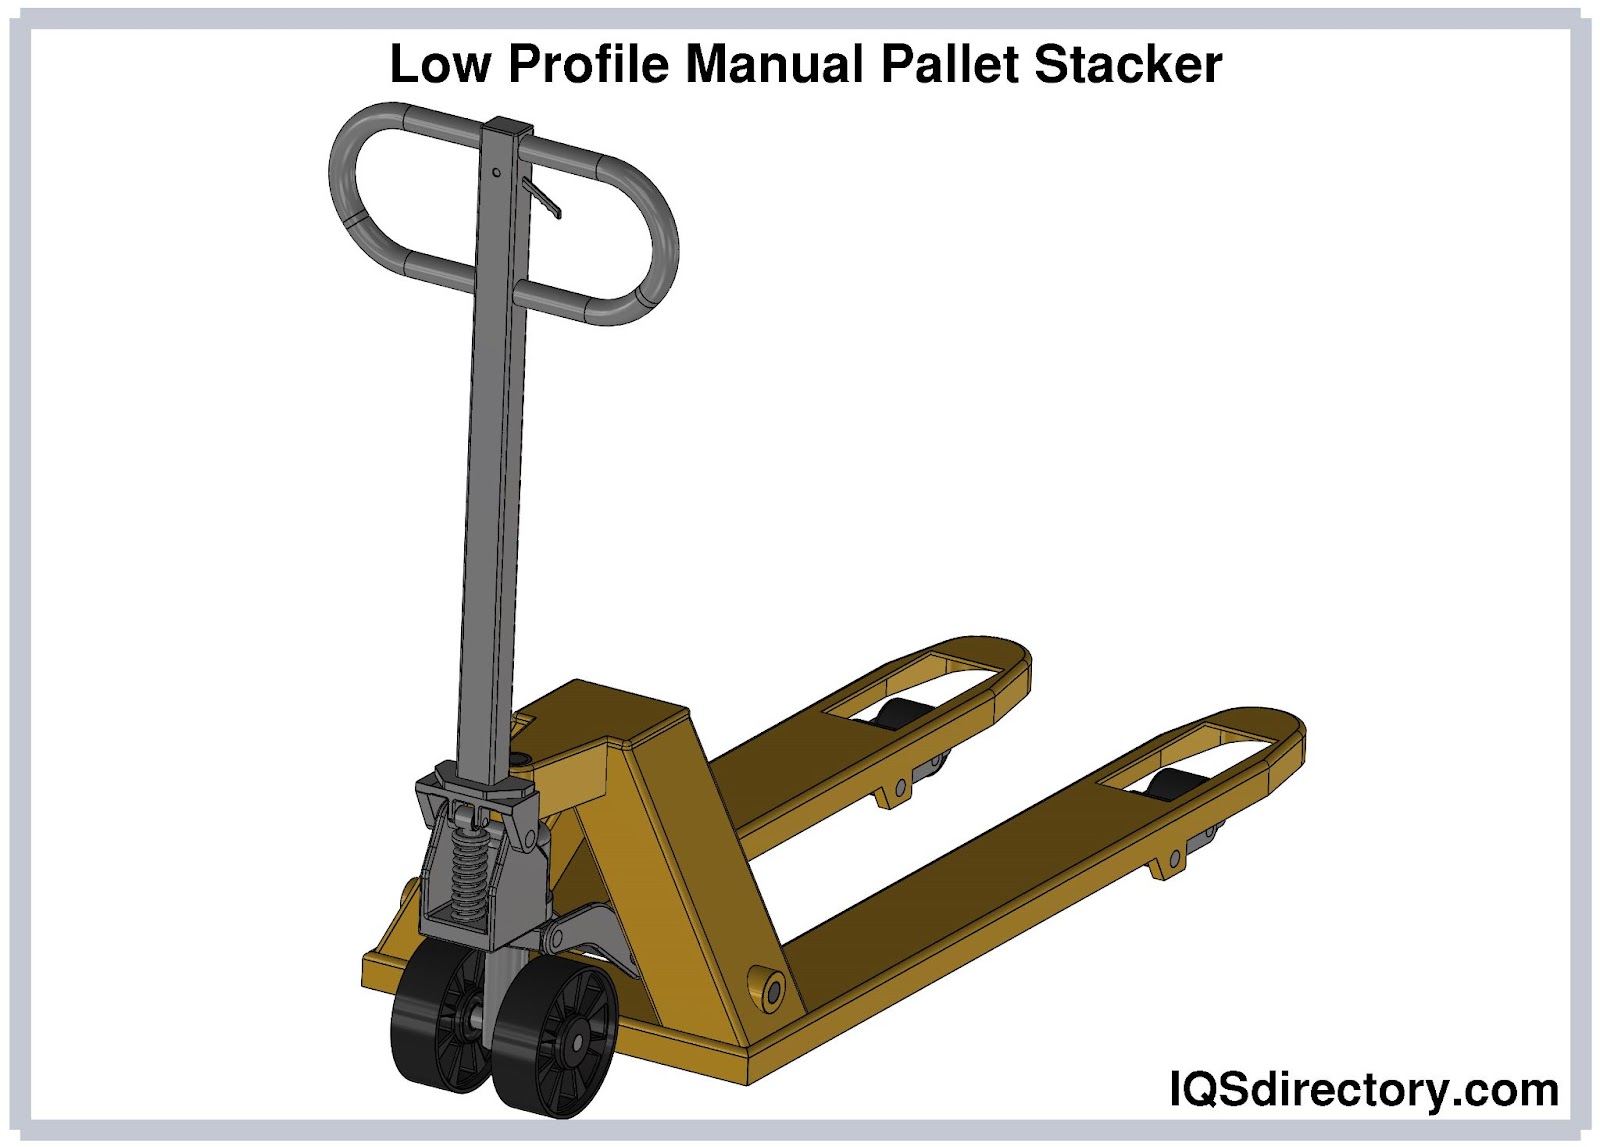 Low Profile Manual Pallet Stacker